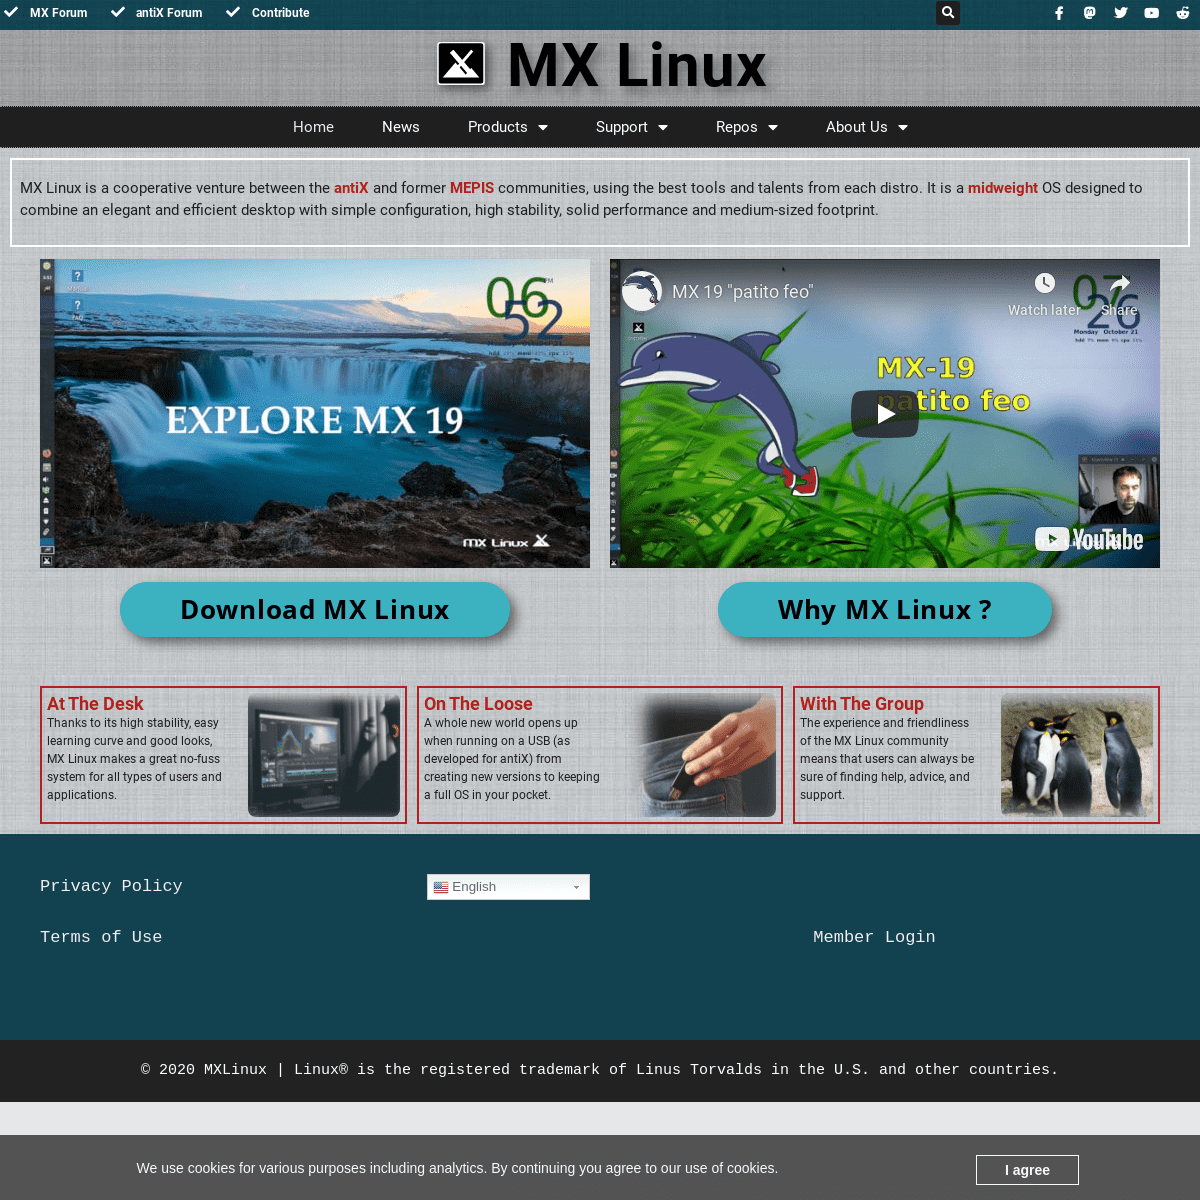 A complete backup of mxlinux.org